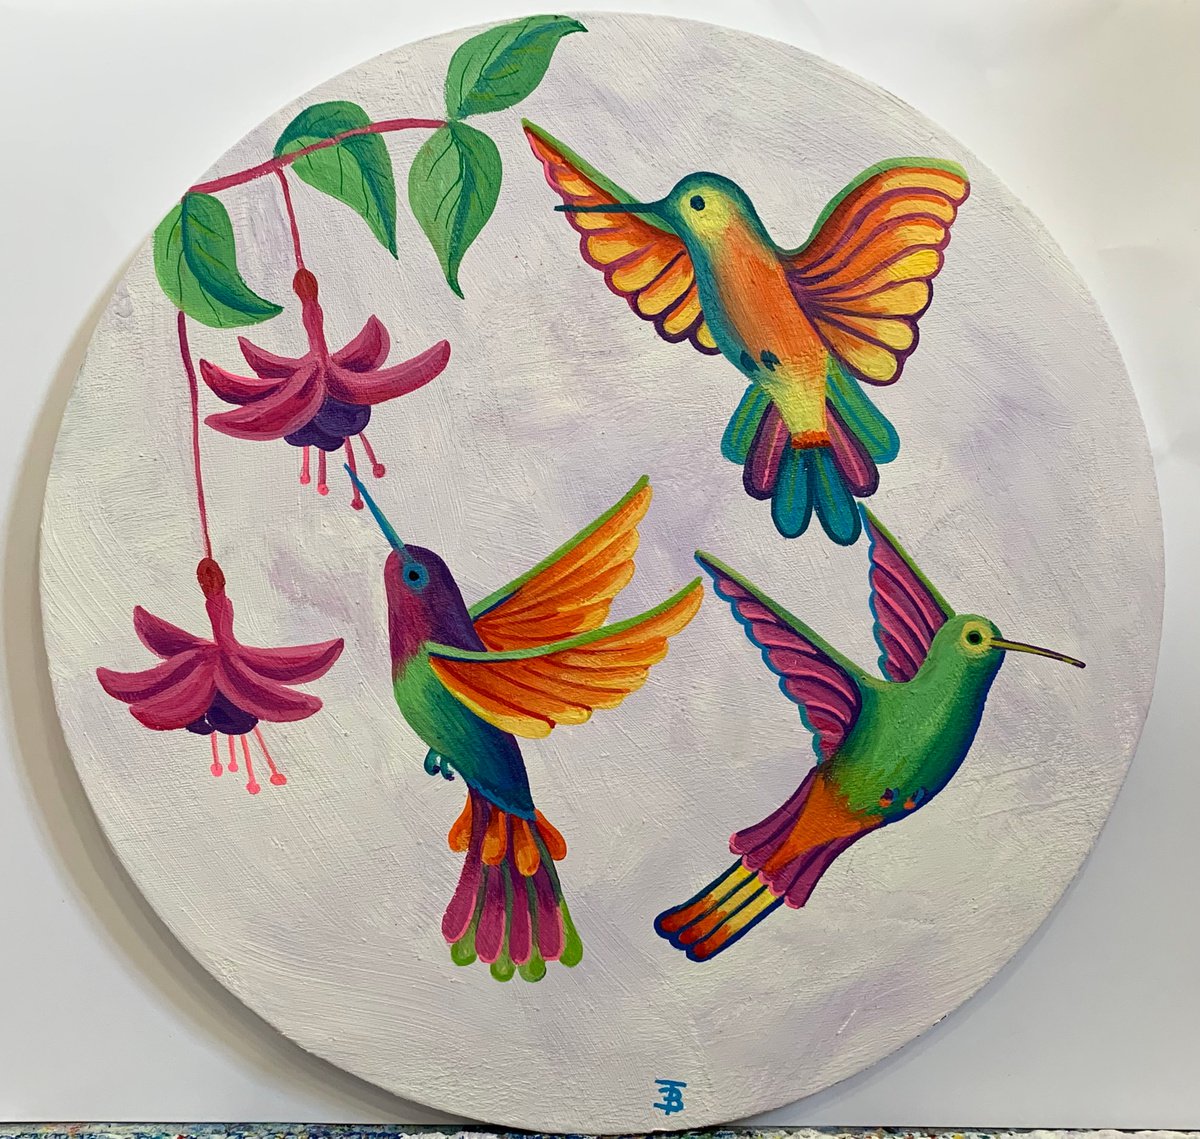 The Three Hummingbirds by Tiffany Budd